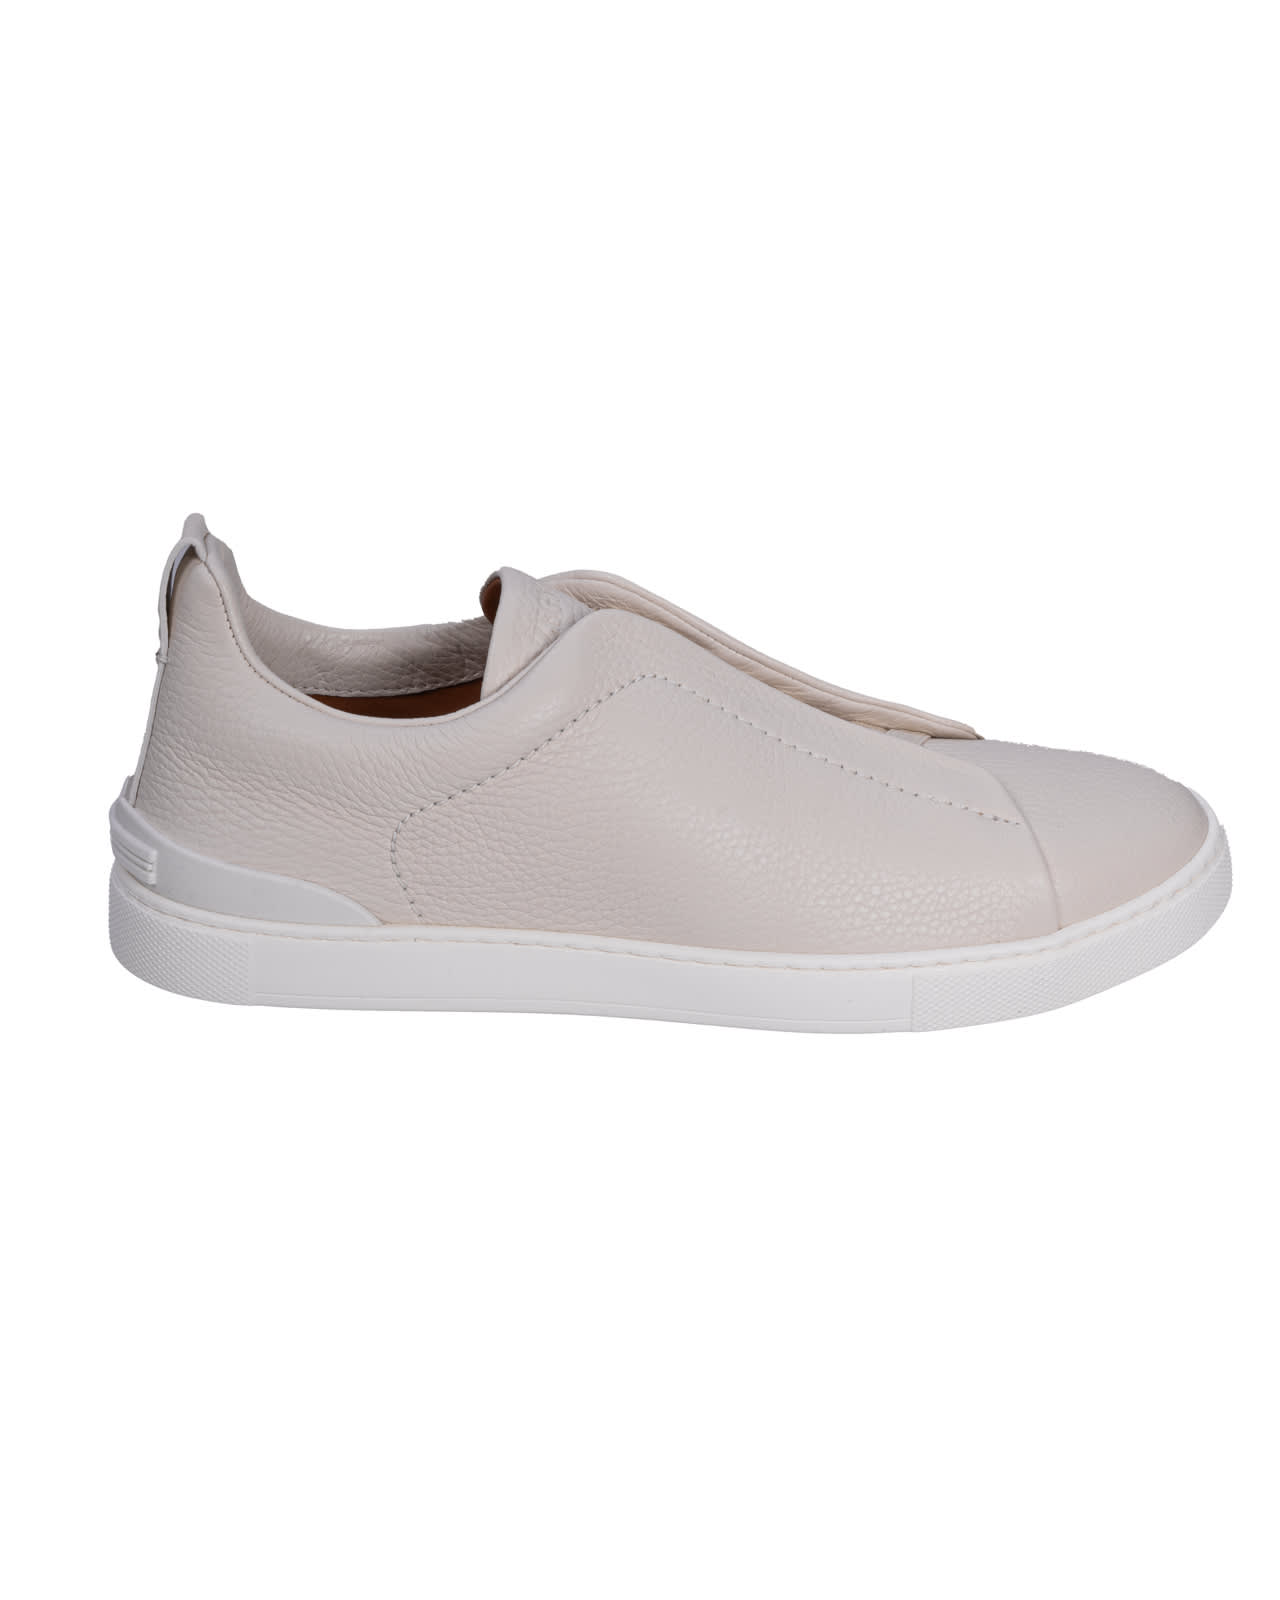 Zegna Flat Shoes White